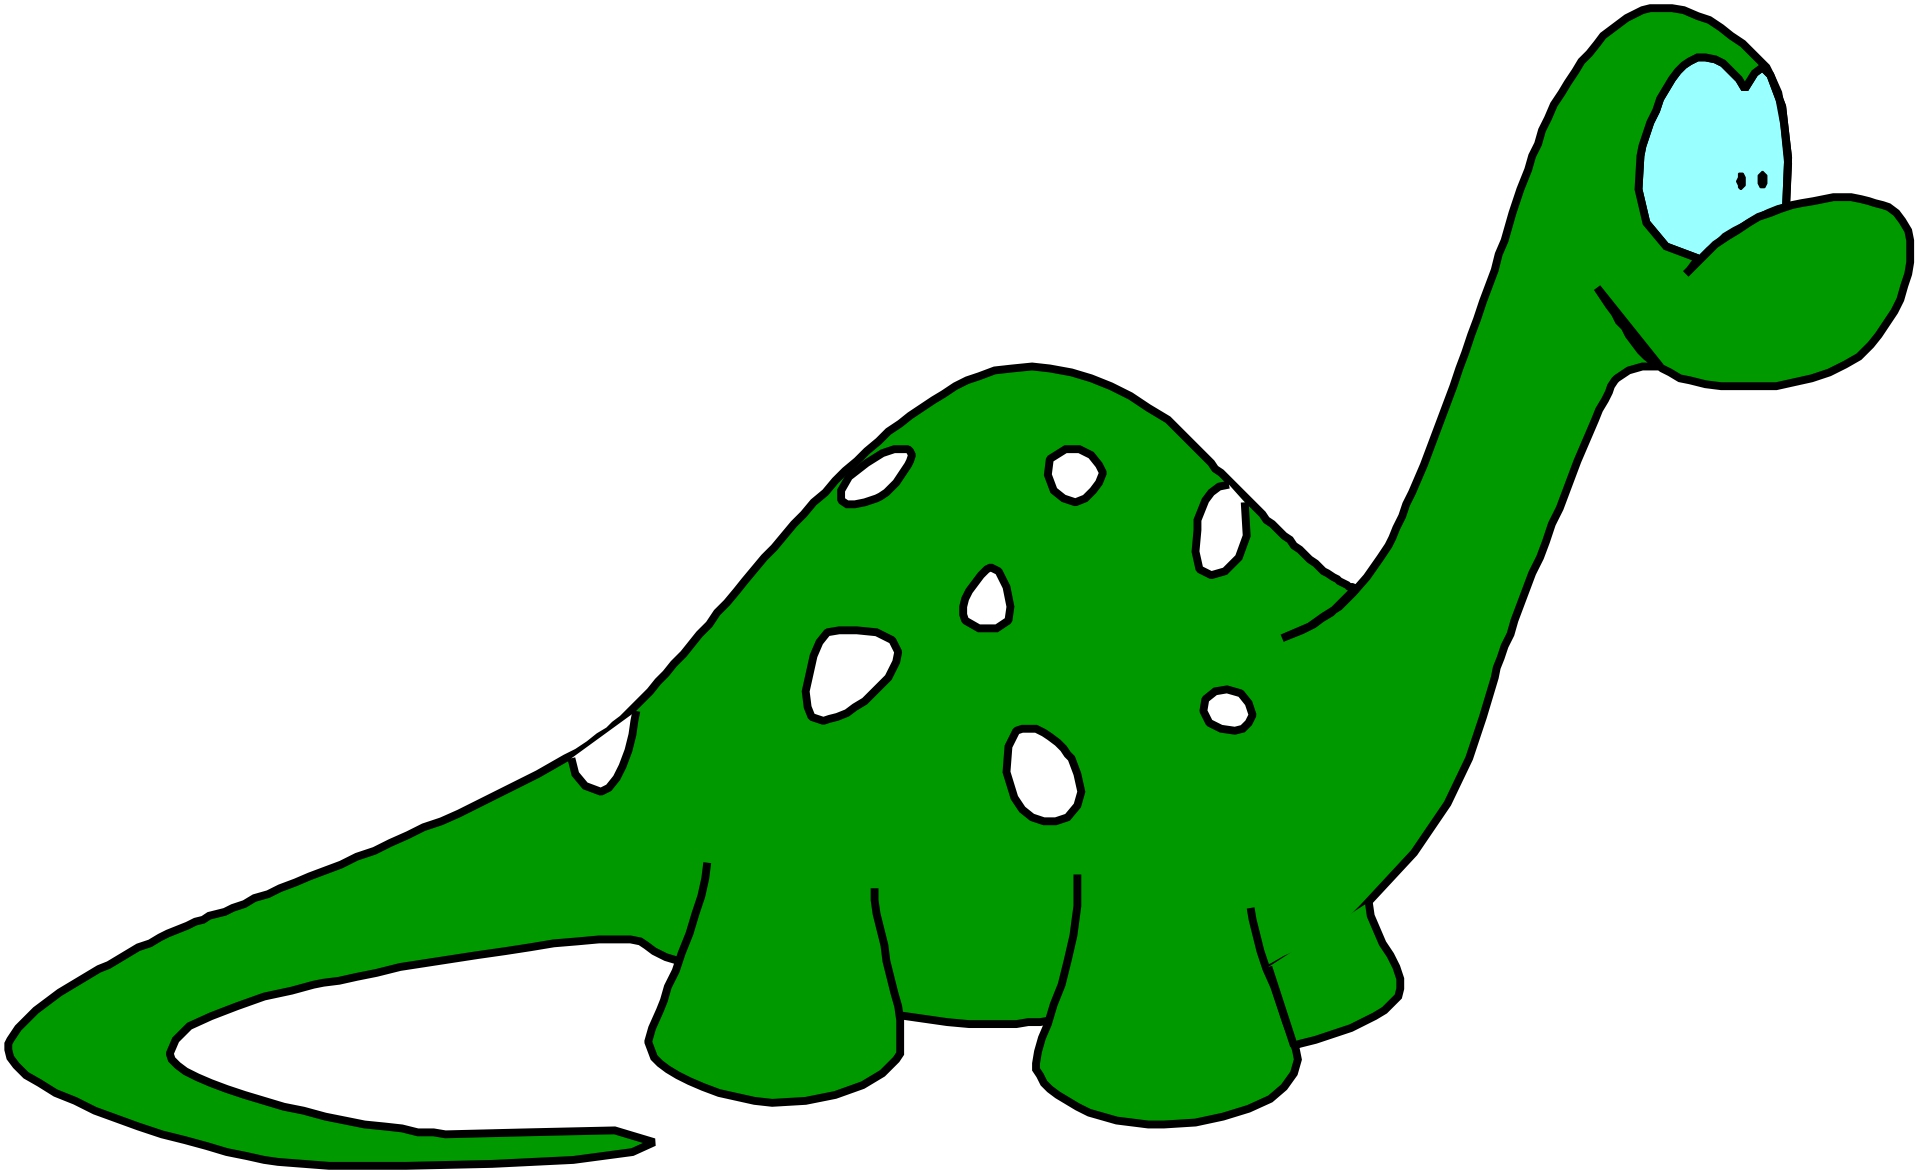 Dinosaur Background Cartoon images